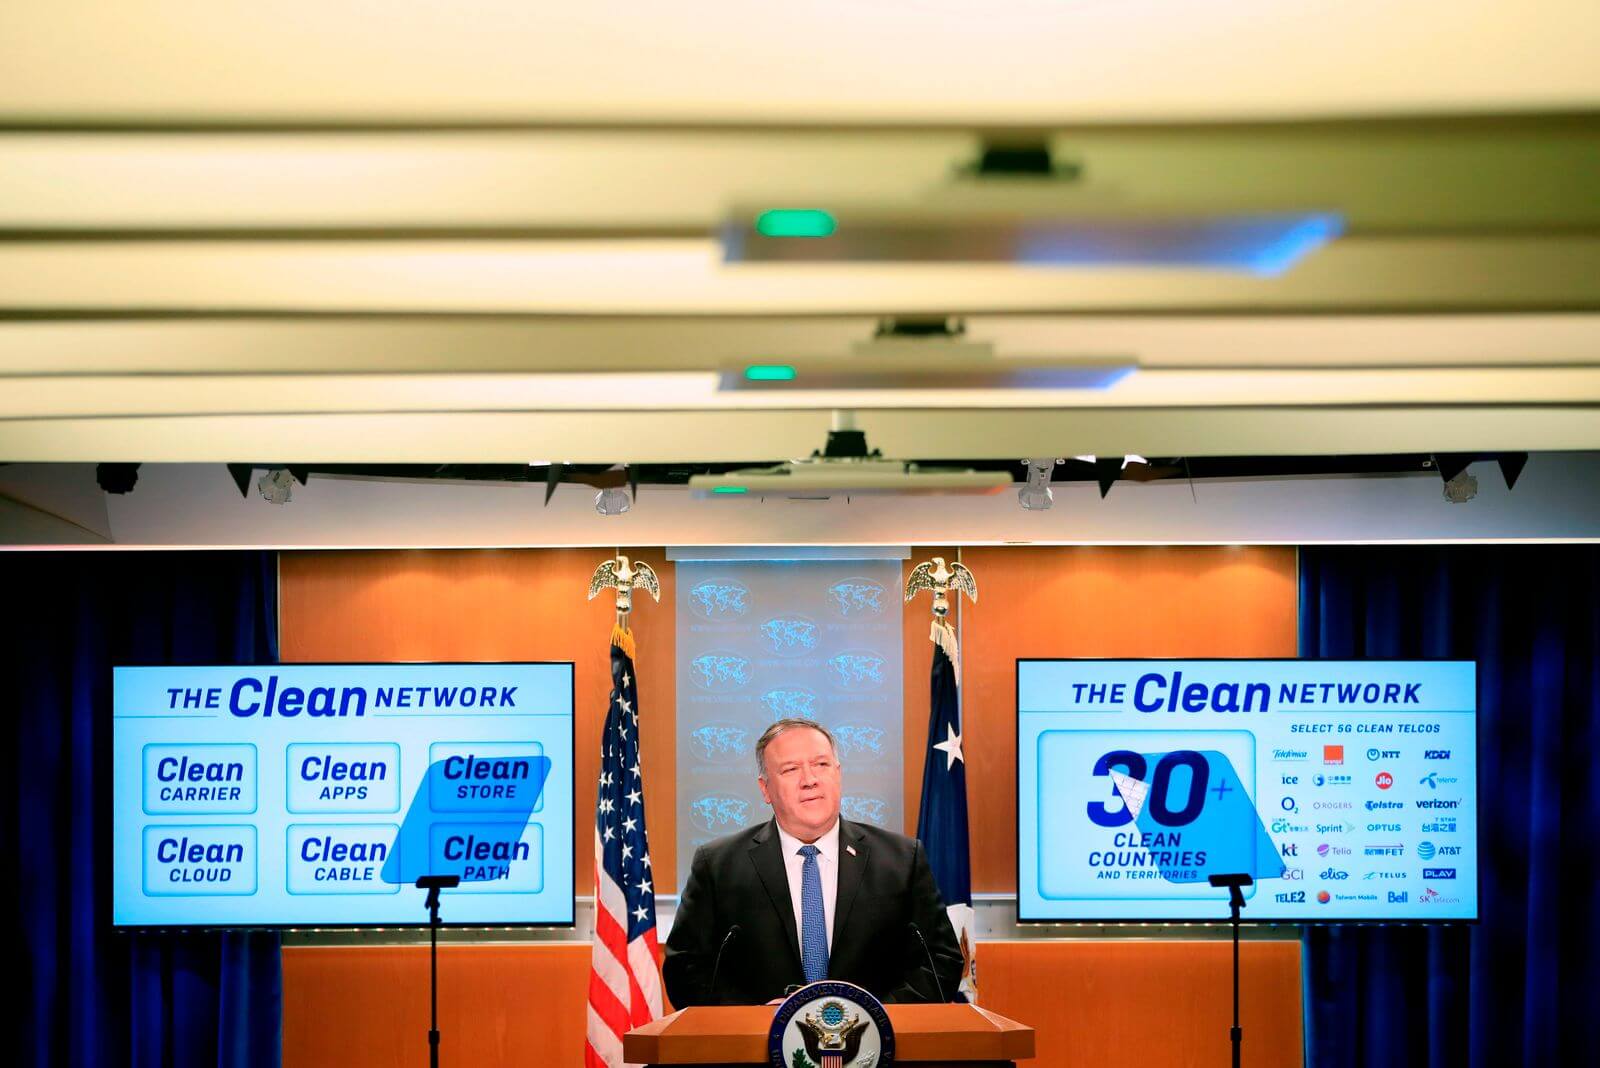 US proposes a five-part Clean Network plan that could lead to a splinternet